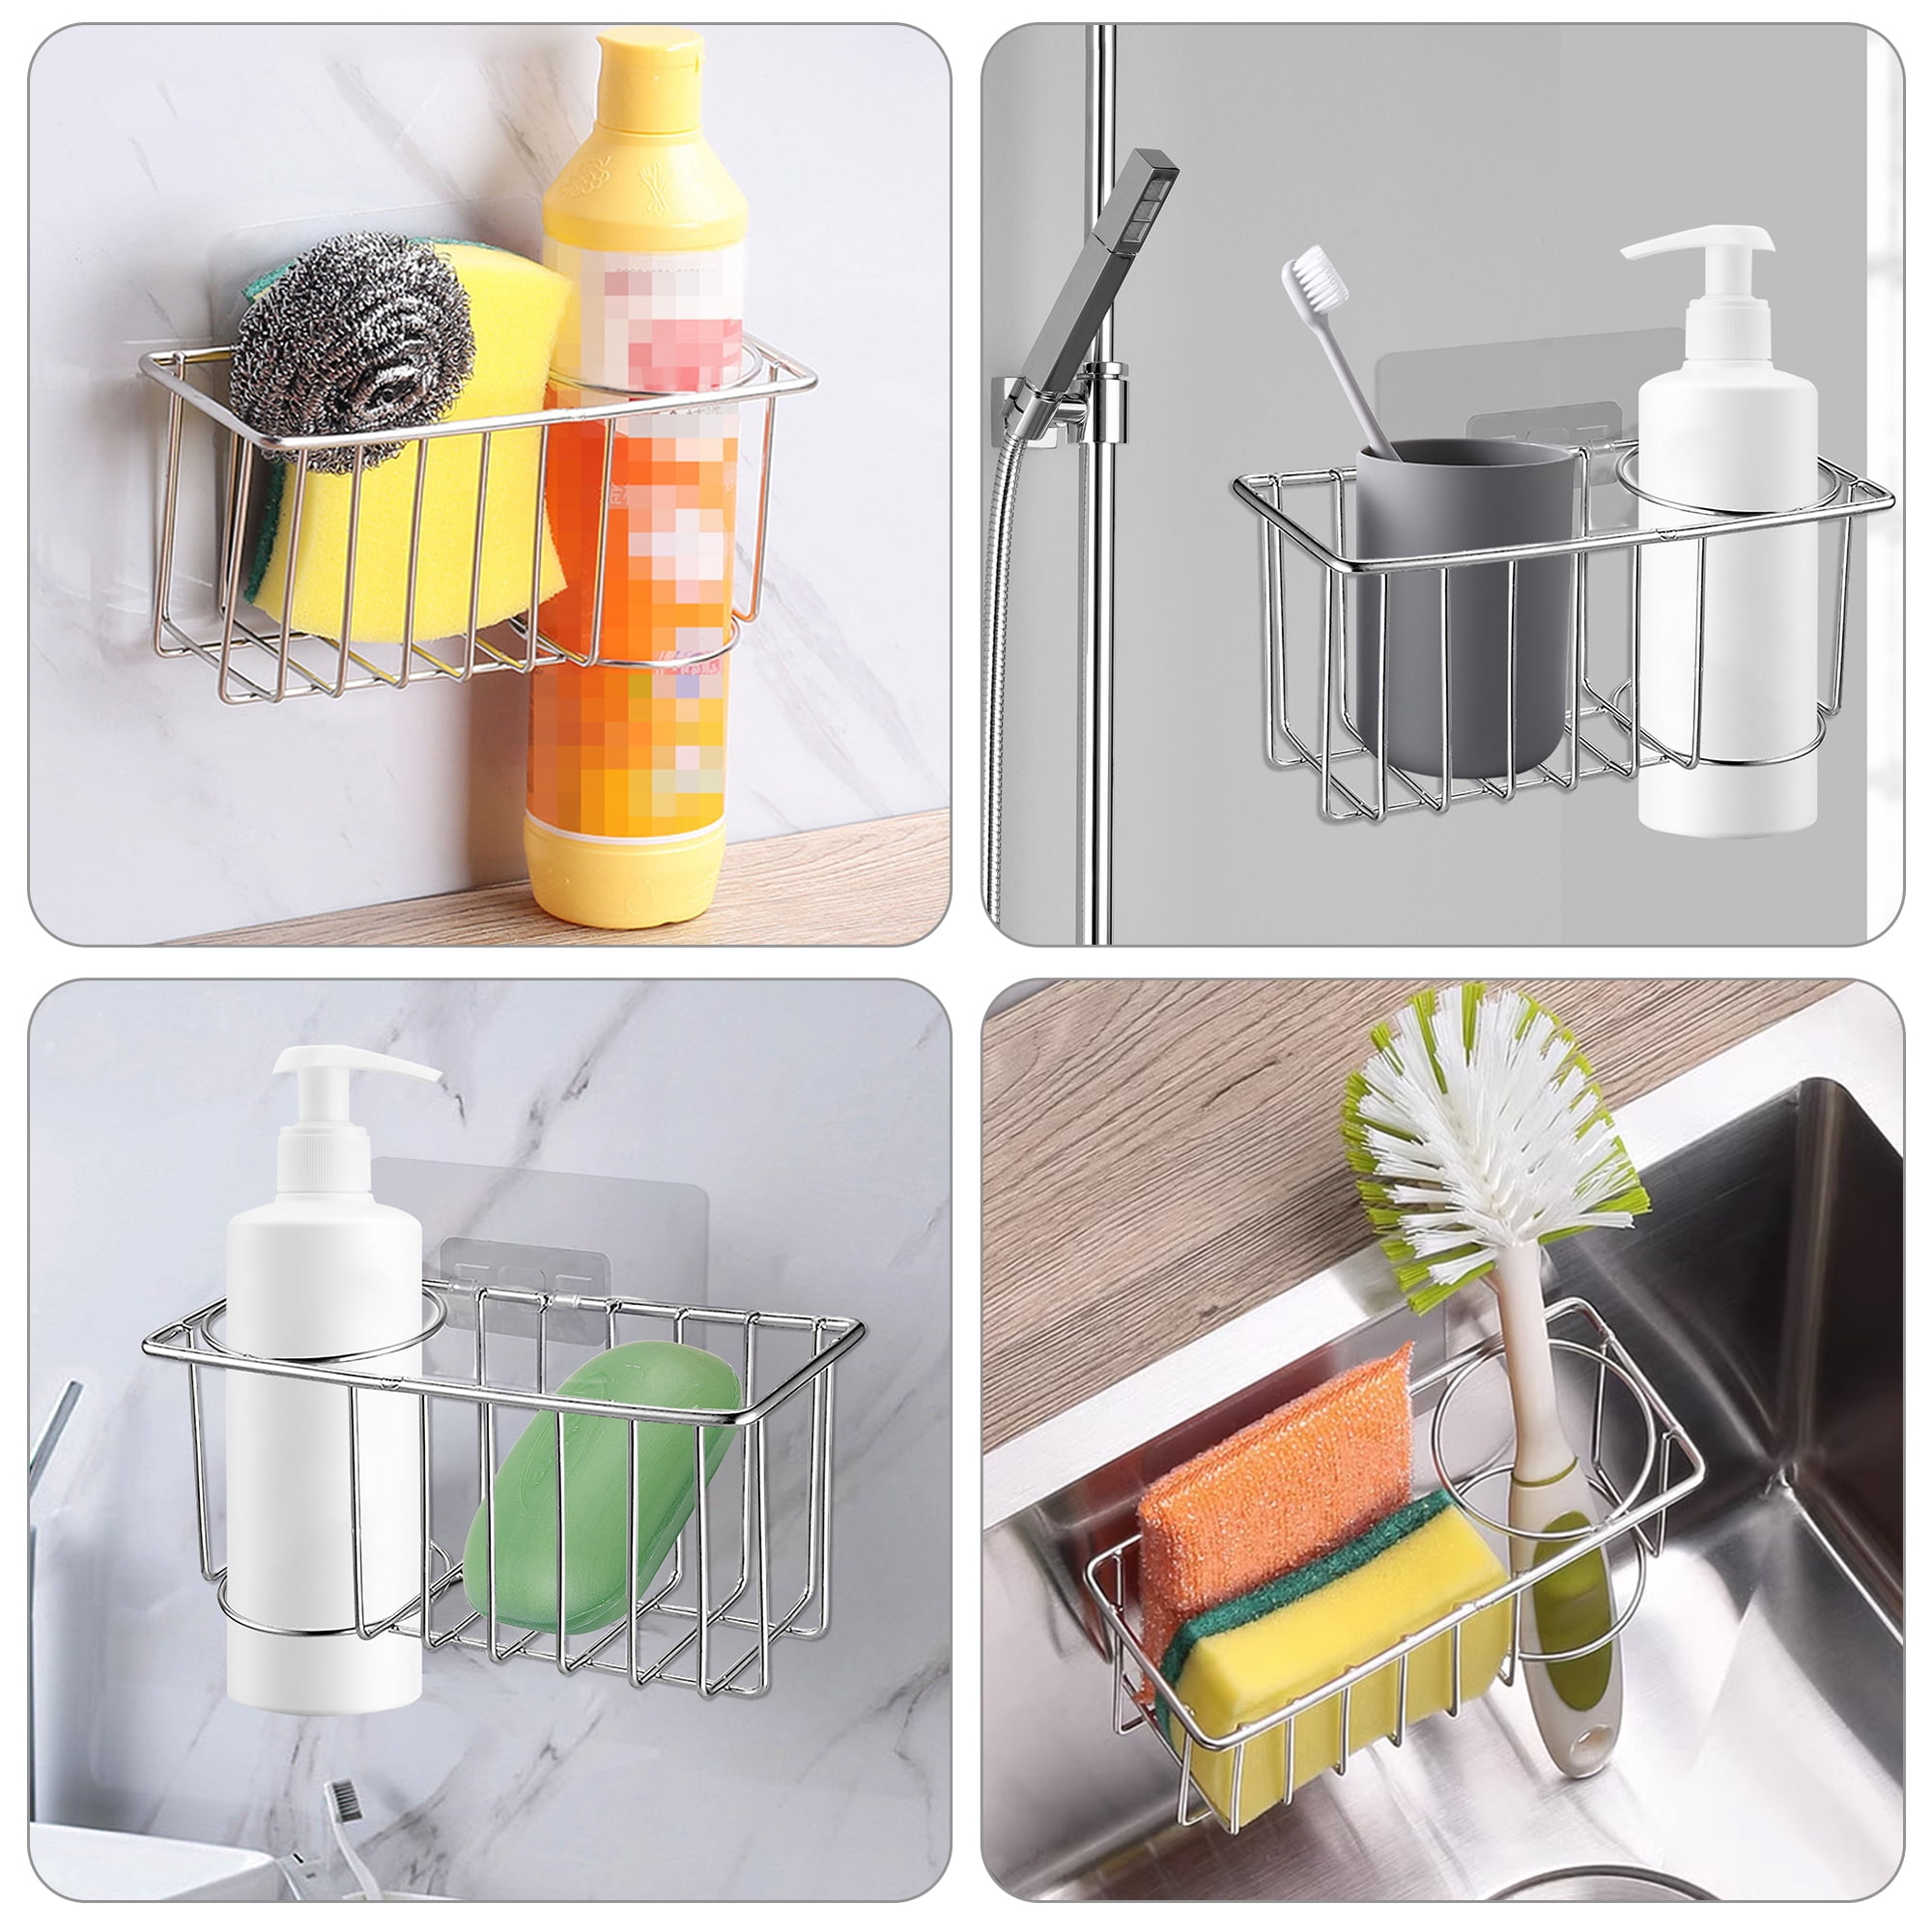 EEEkit Kitchen Hanging Sponge Holder, Adjustable Rubber Sink Caddy Organizer Dishwashing Liquid Drainer Brush Rack, Draining Basket for Scrubber Dish